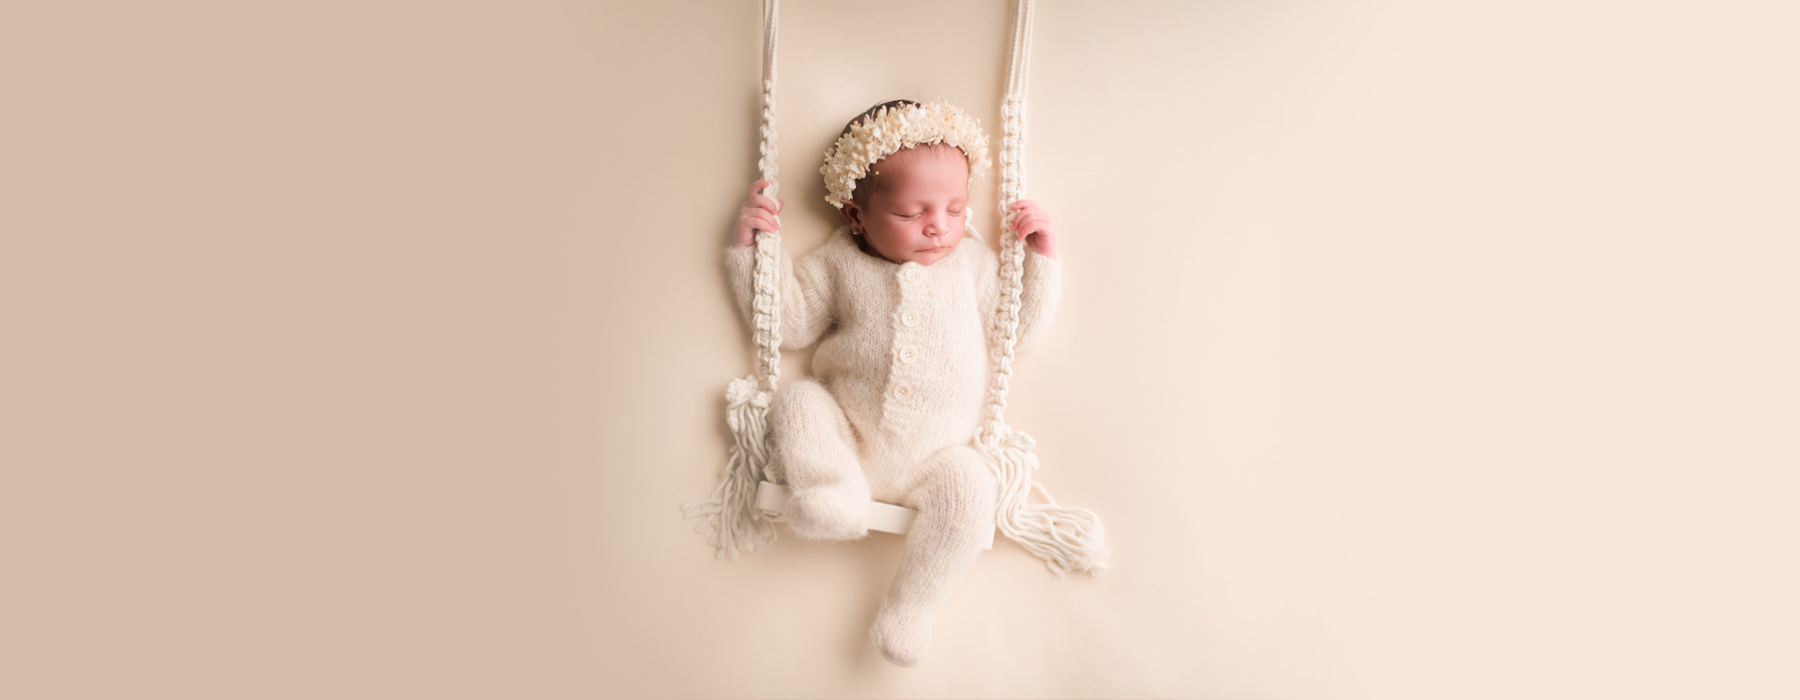 Photographing Newborn with strobe light 2